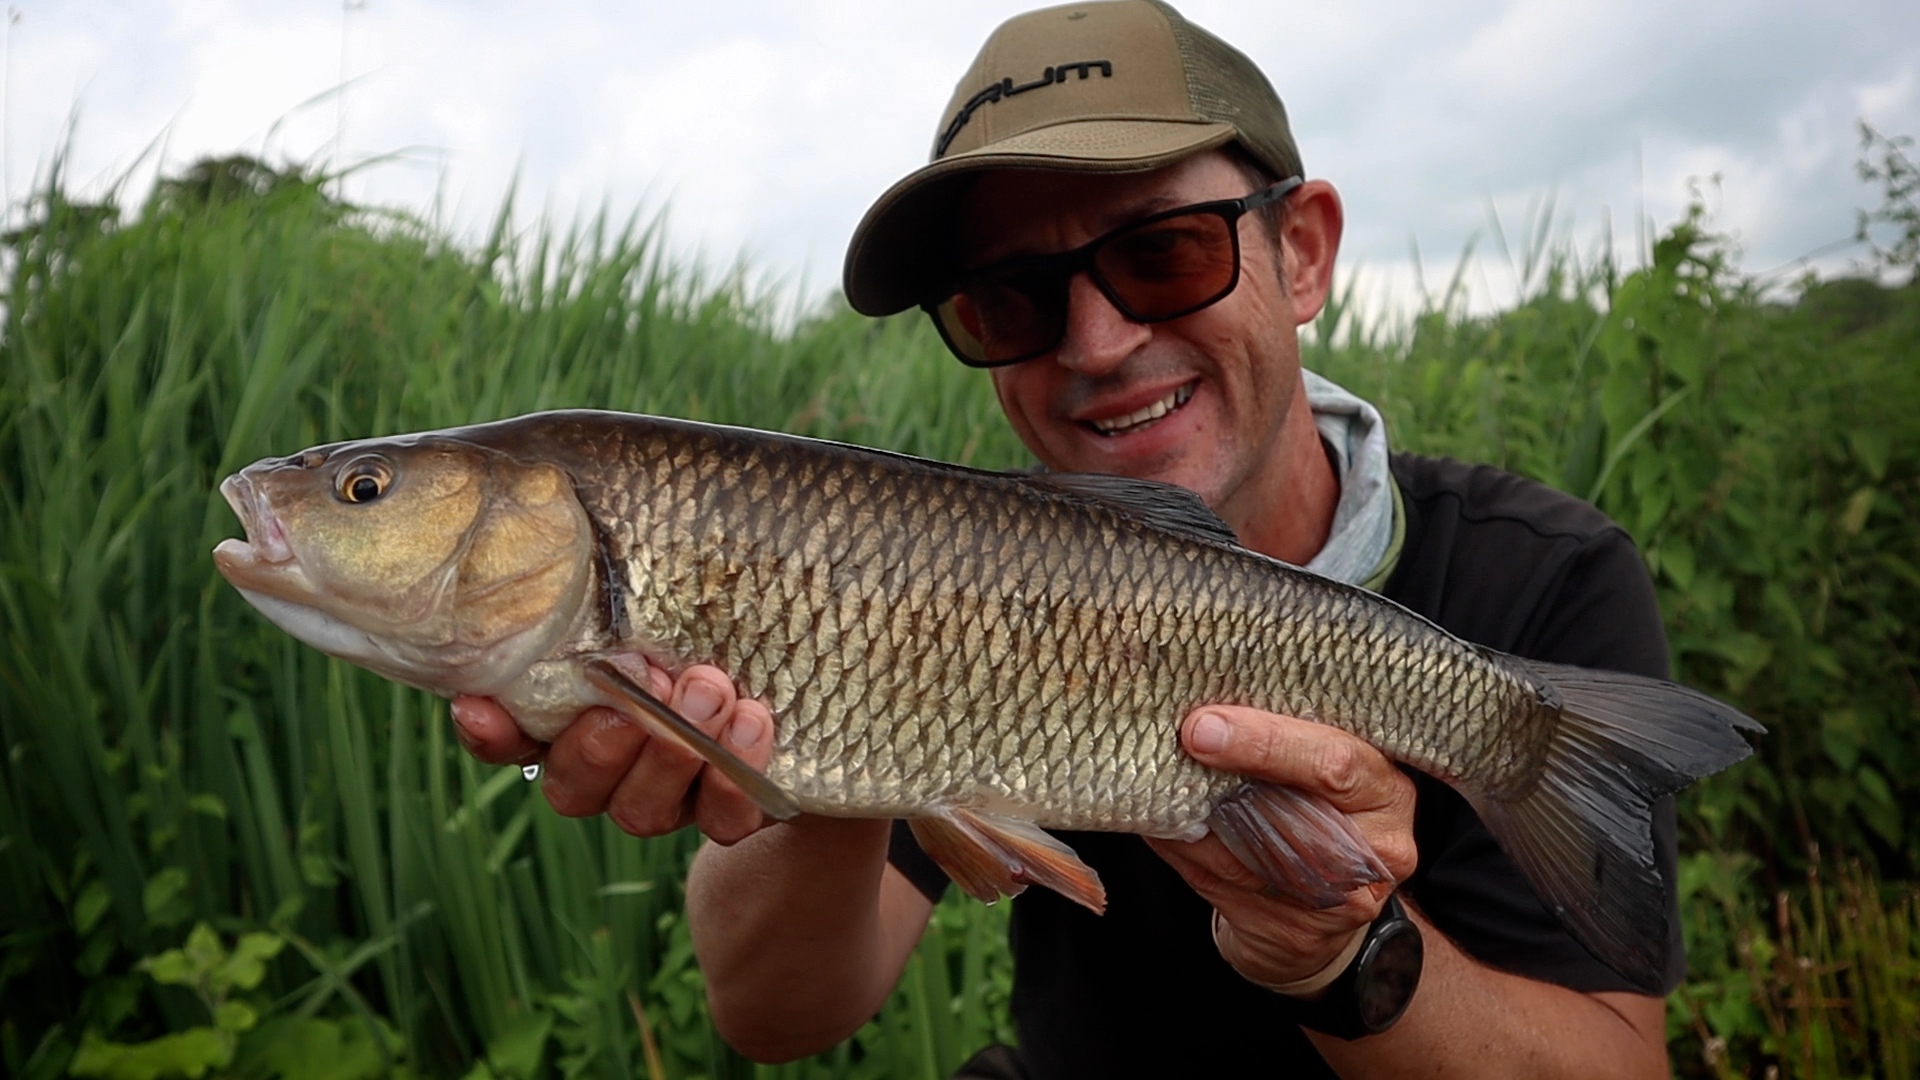 Chub and barbel fishing on small rivers - Life on the bank